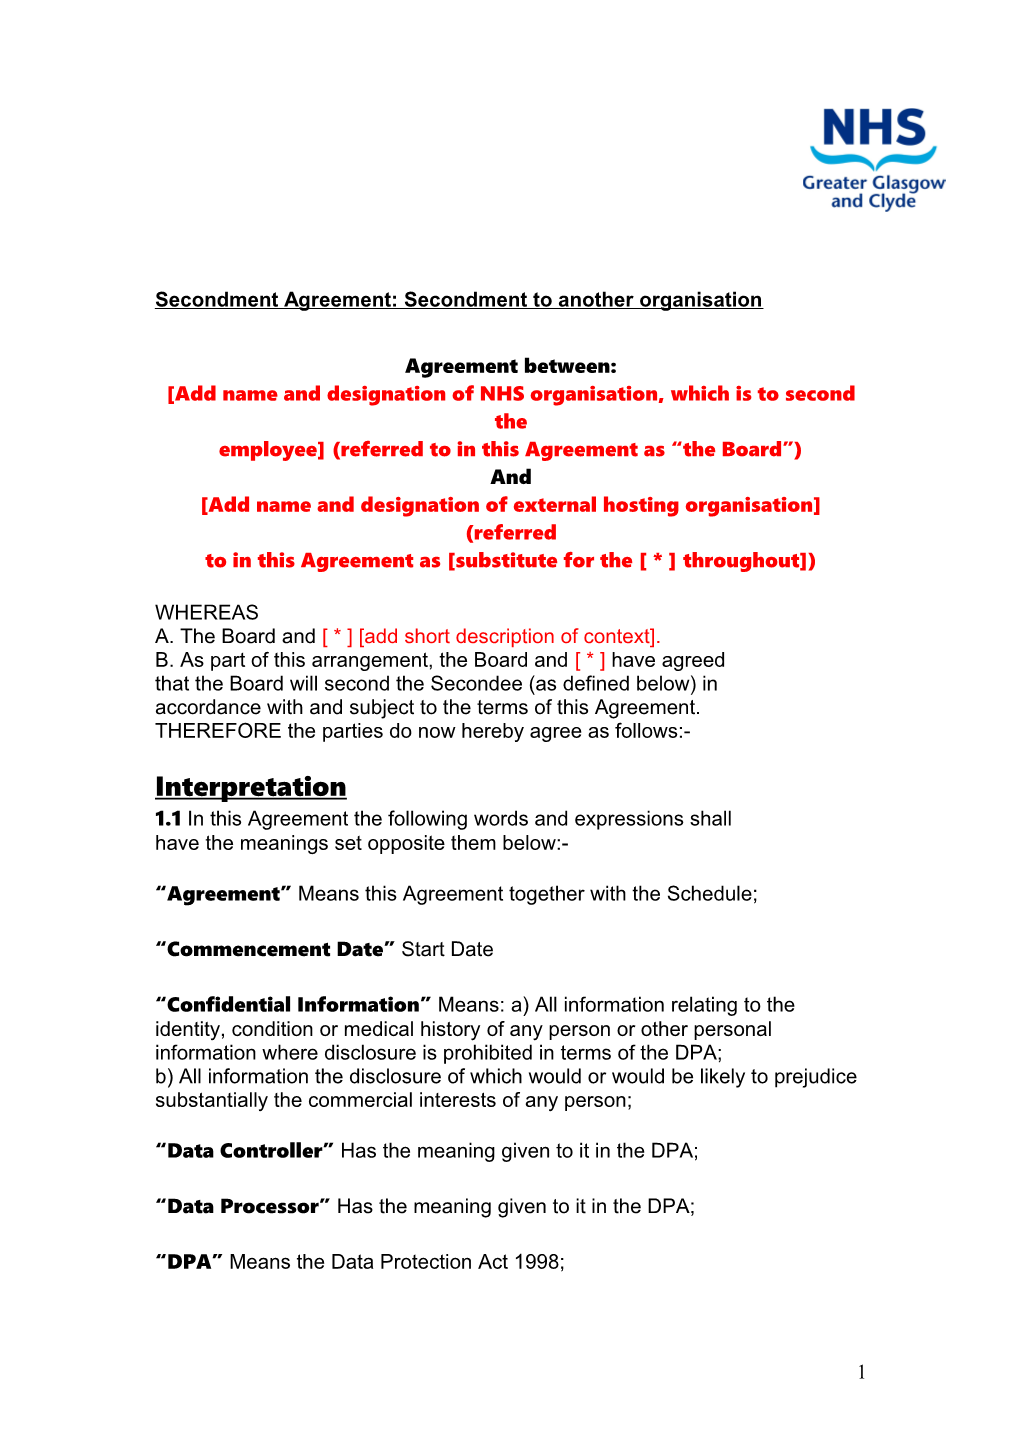 Model Secondment Agreement